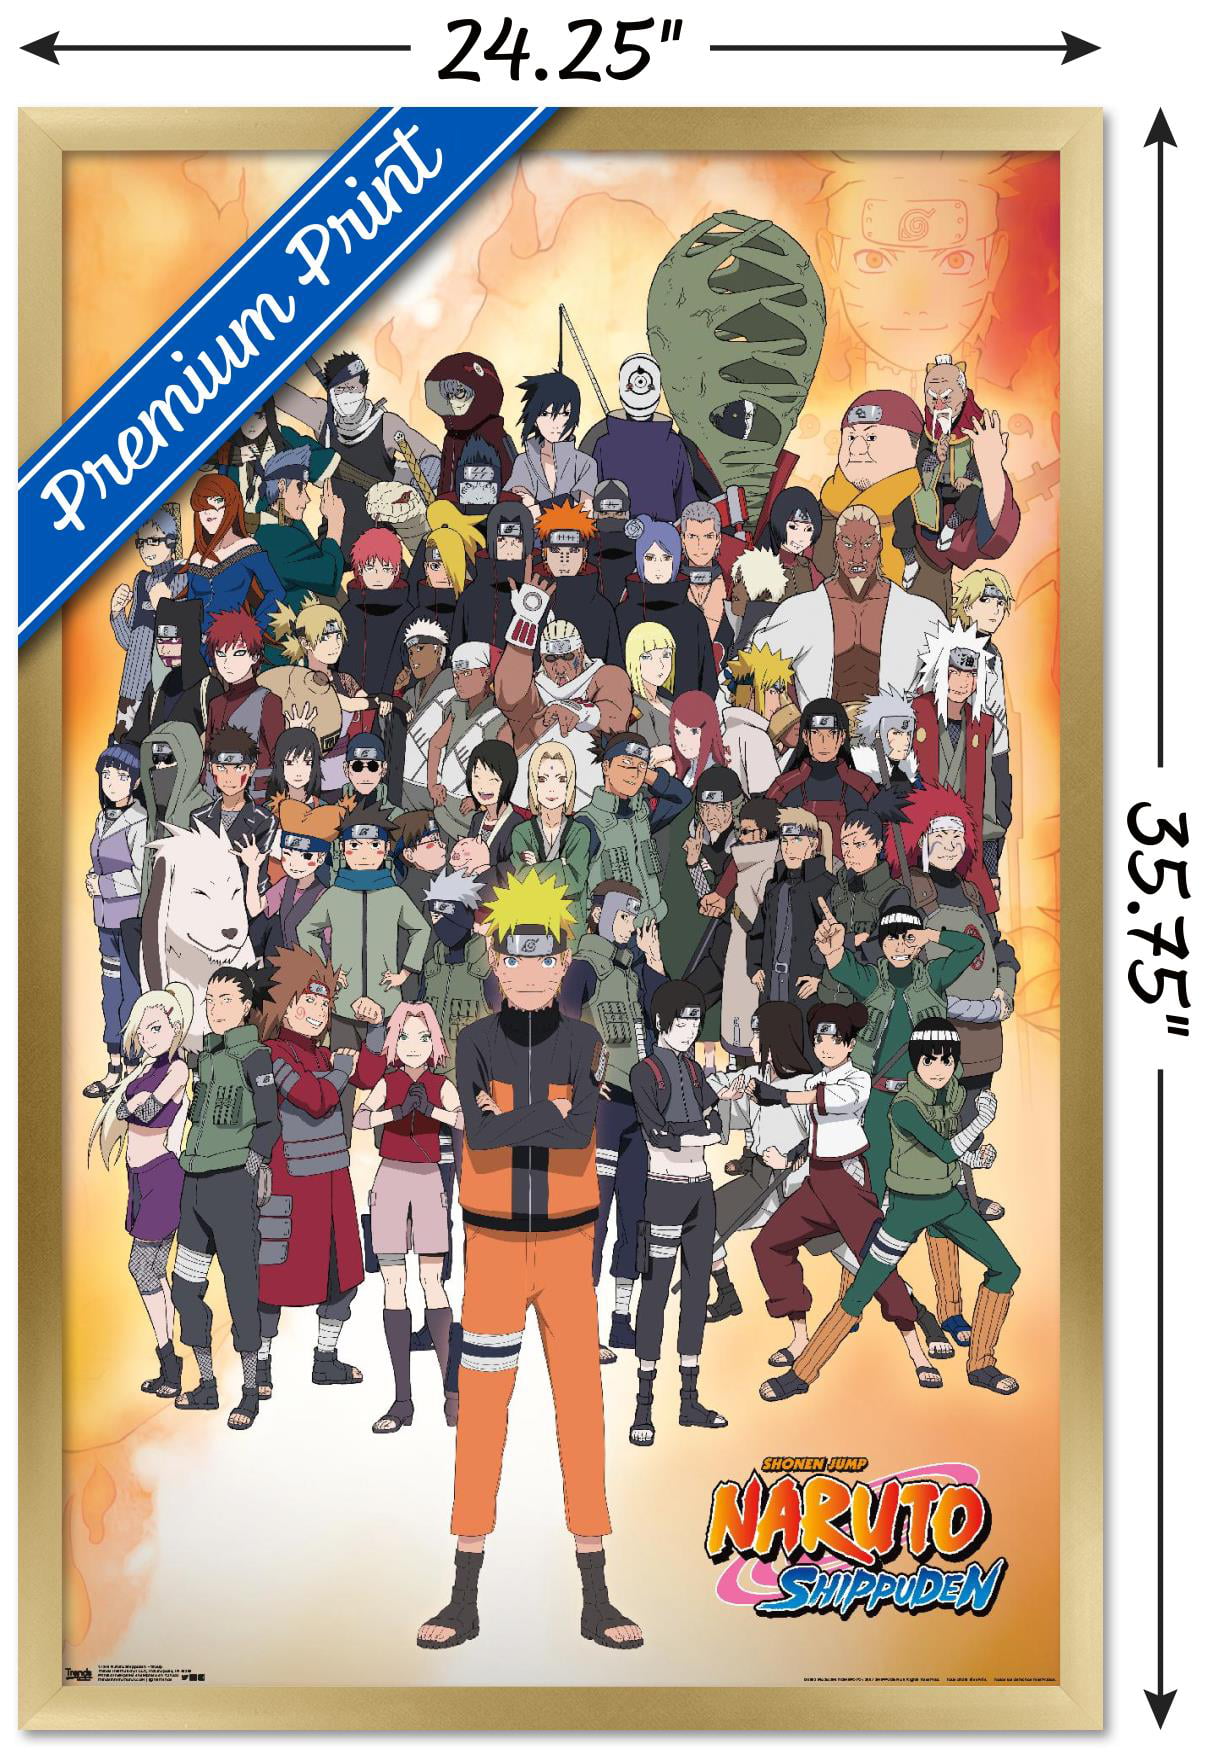  Pyramid America - Naruto Poster - Naruto Shippuden - Gaara Sand  - 11 x 17 Framed Poster Print: Posters & Prints